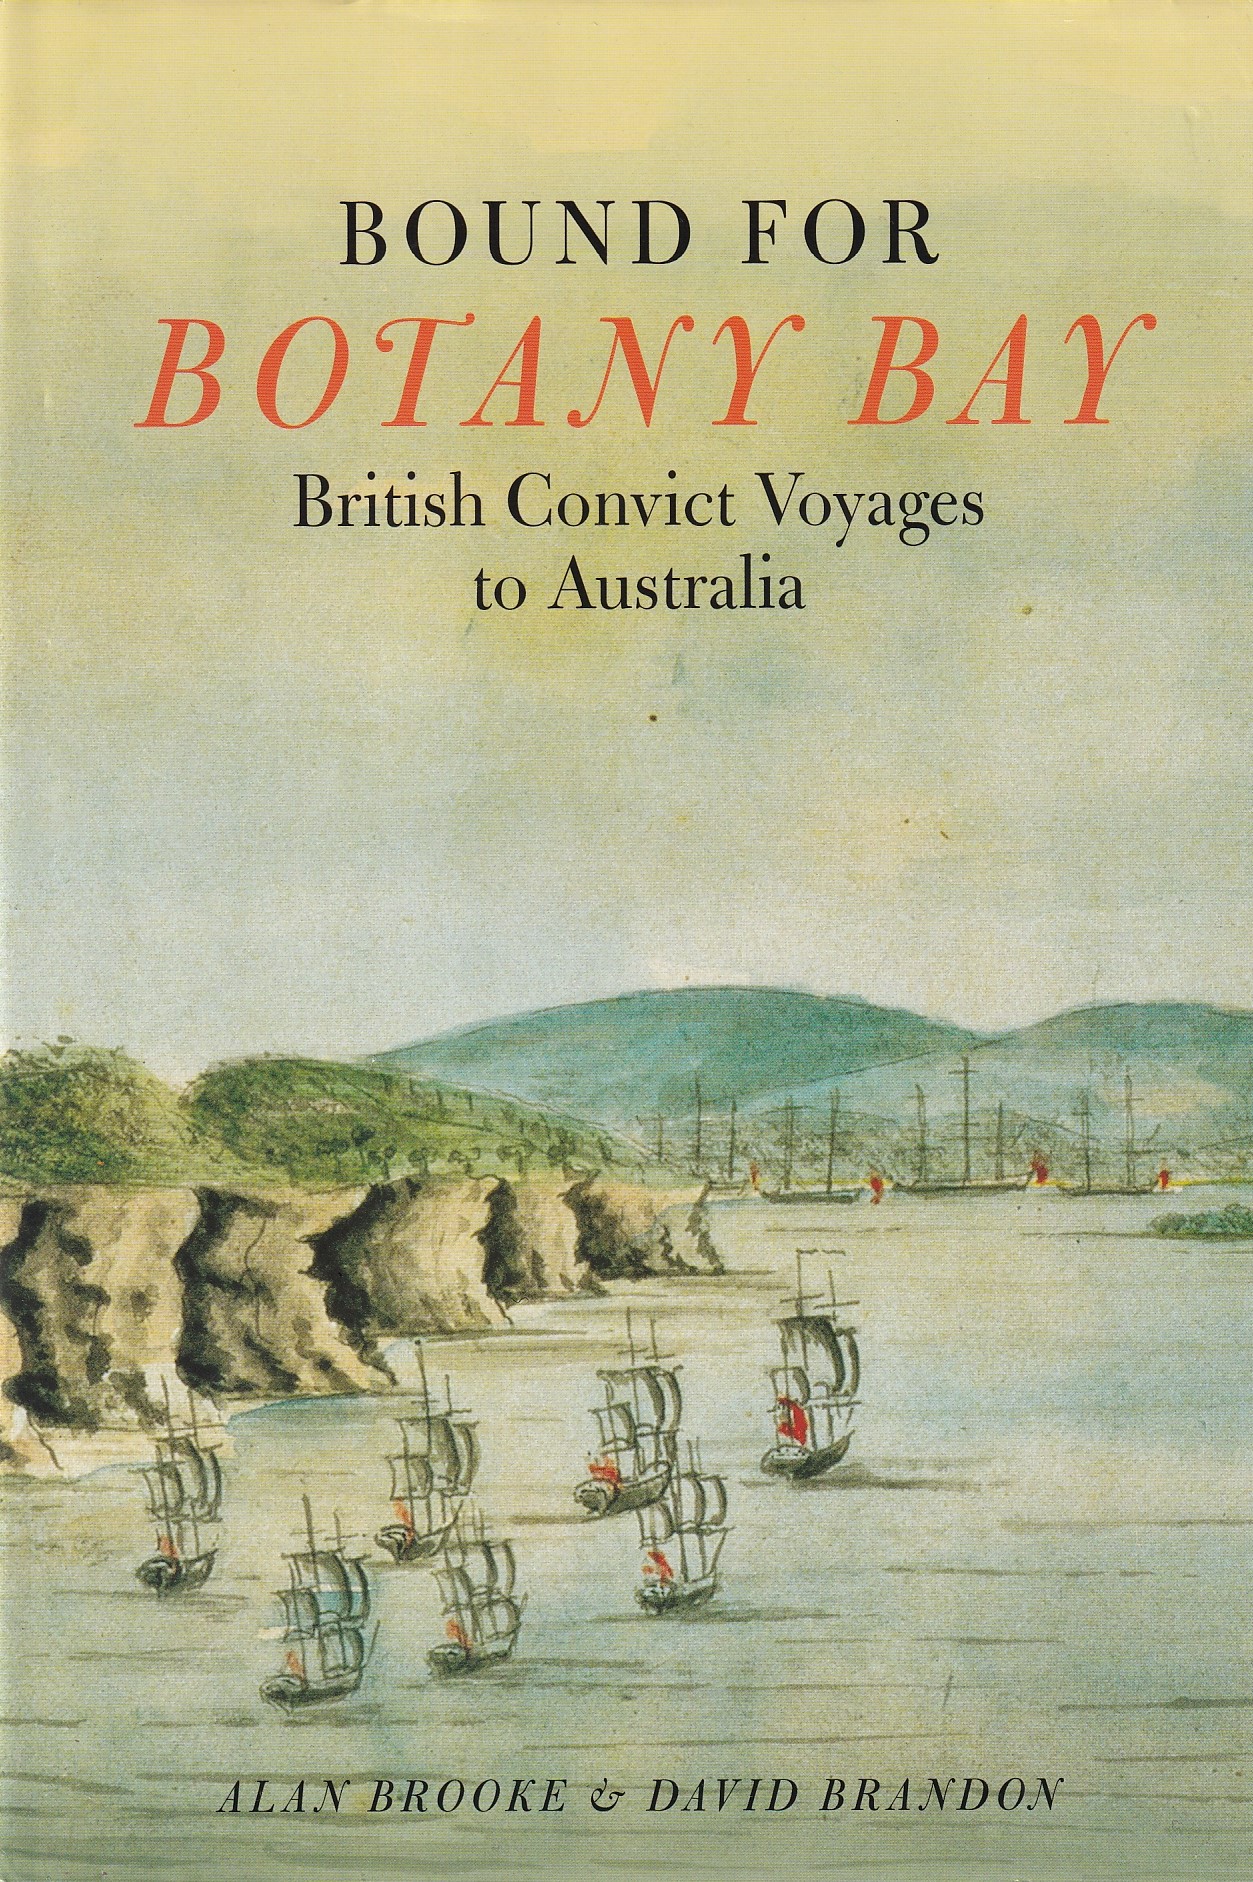 Bound for Botany Bay: British Convict Voyages to Australia by Alan Brooke & David Brandon